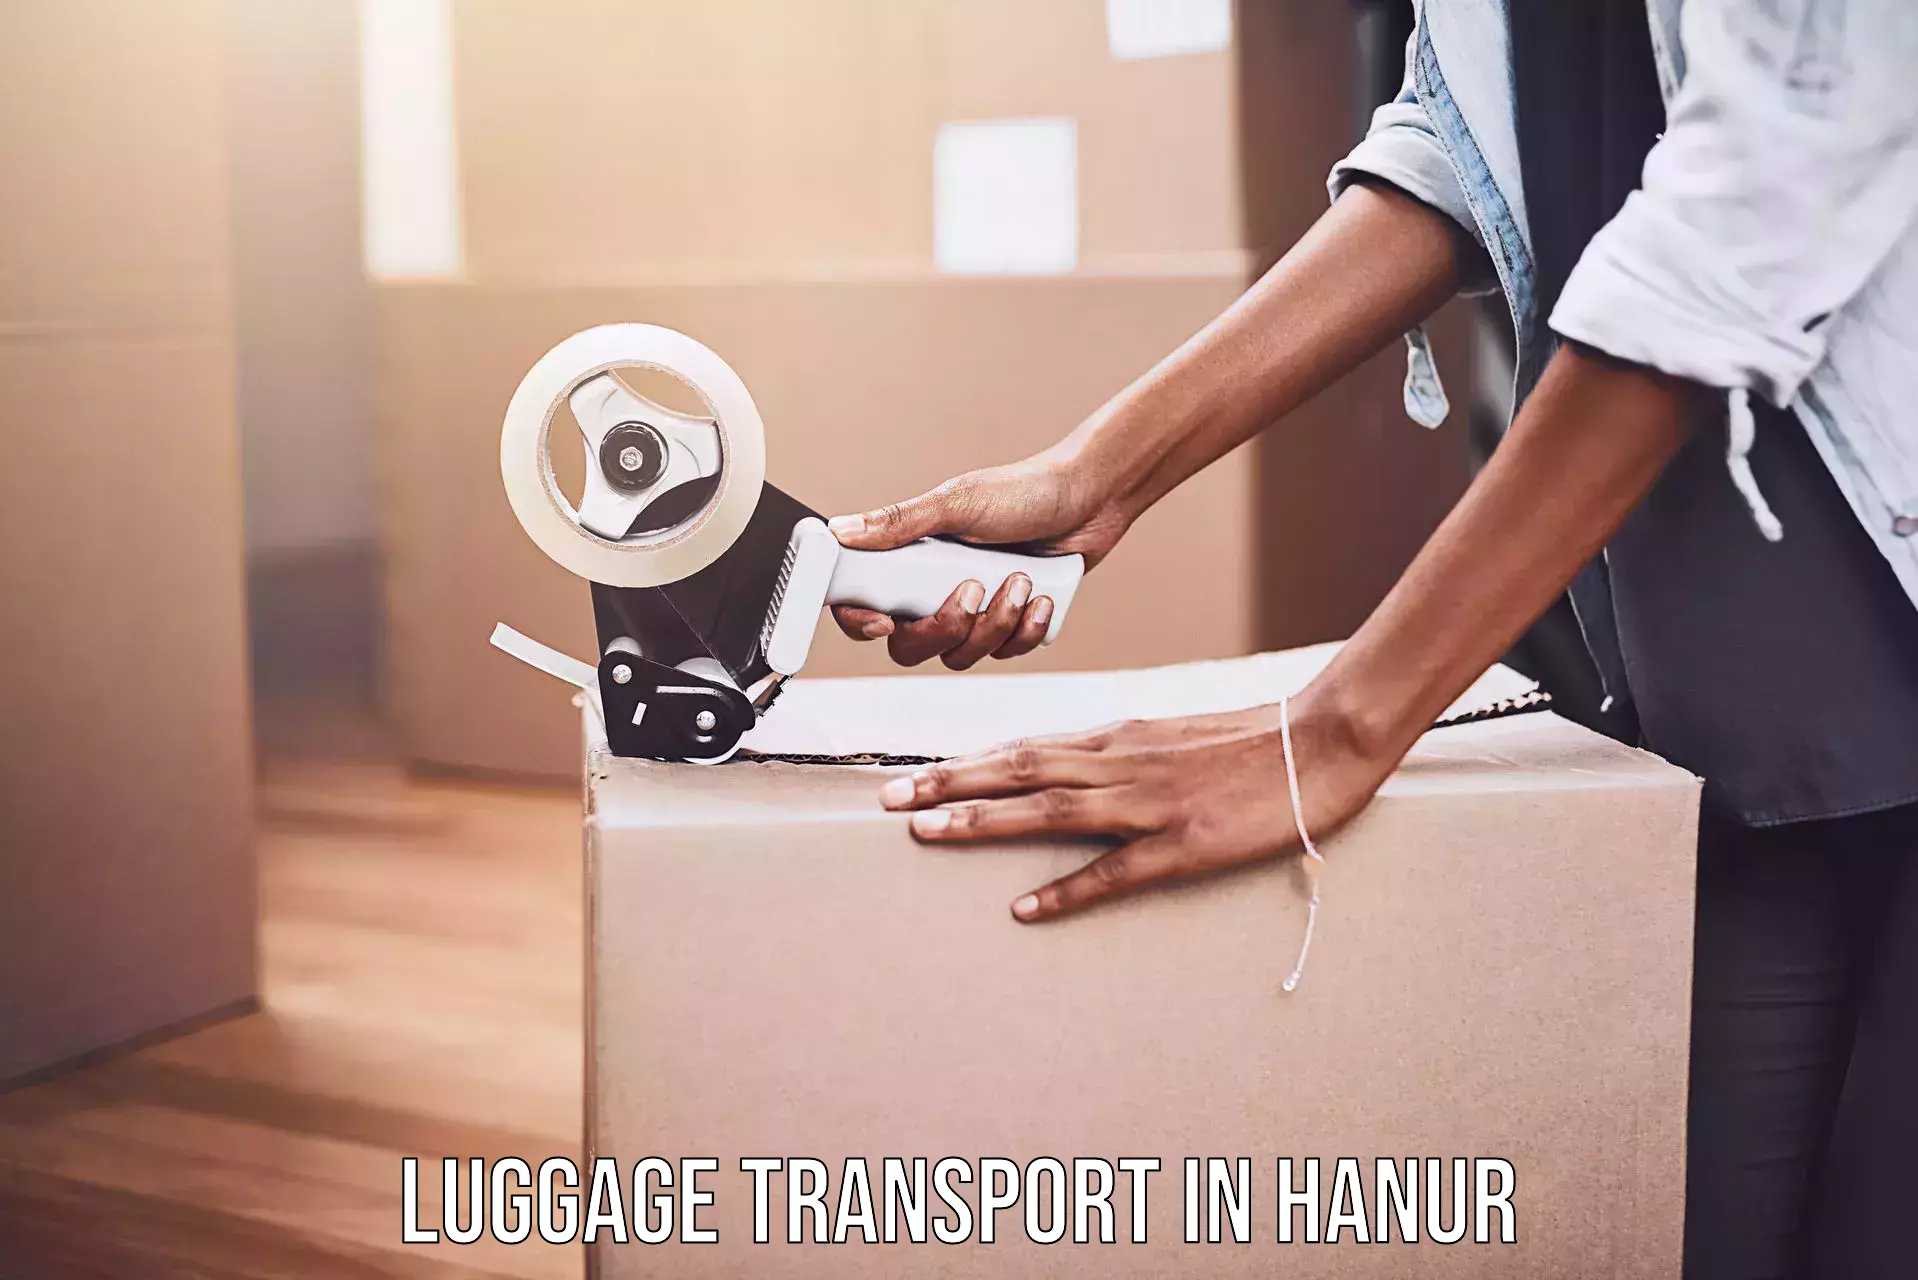 Luggage transfer service in Hanur